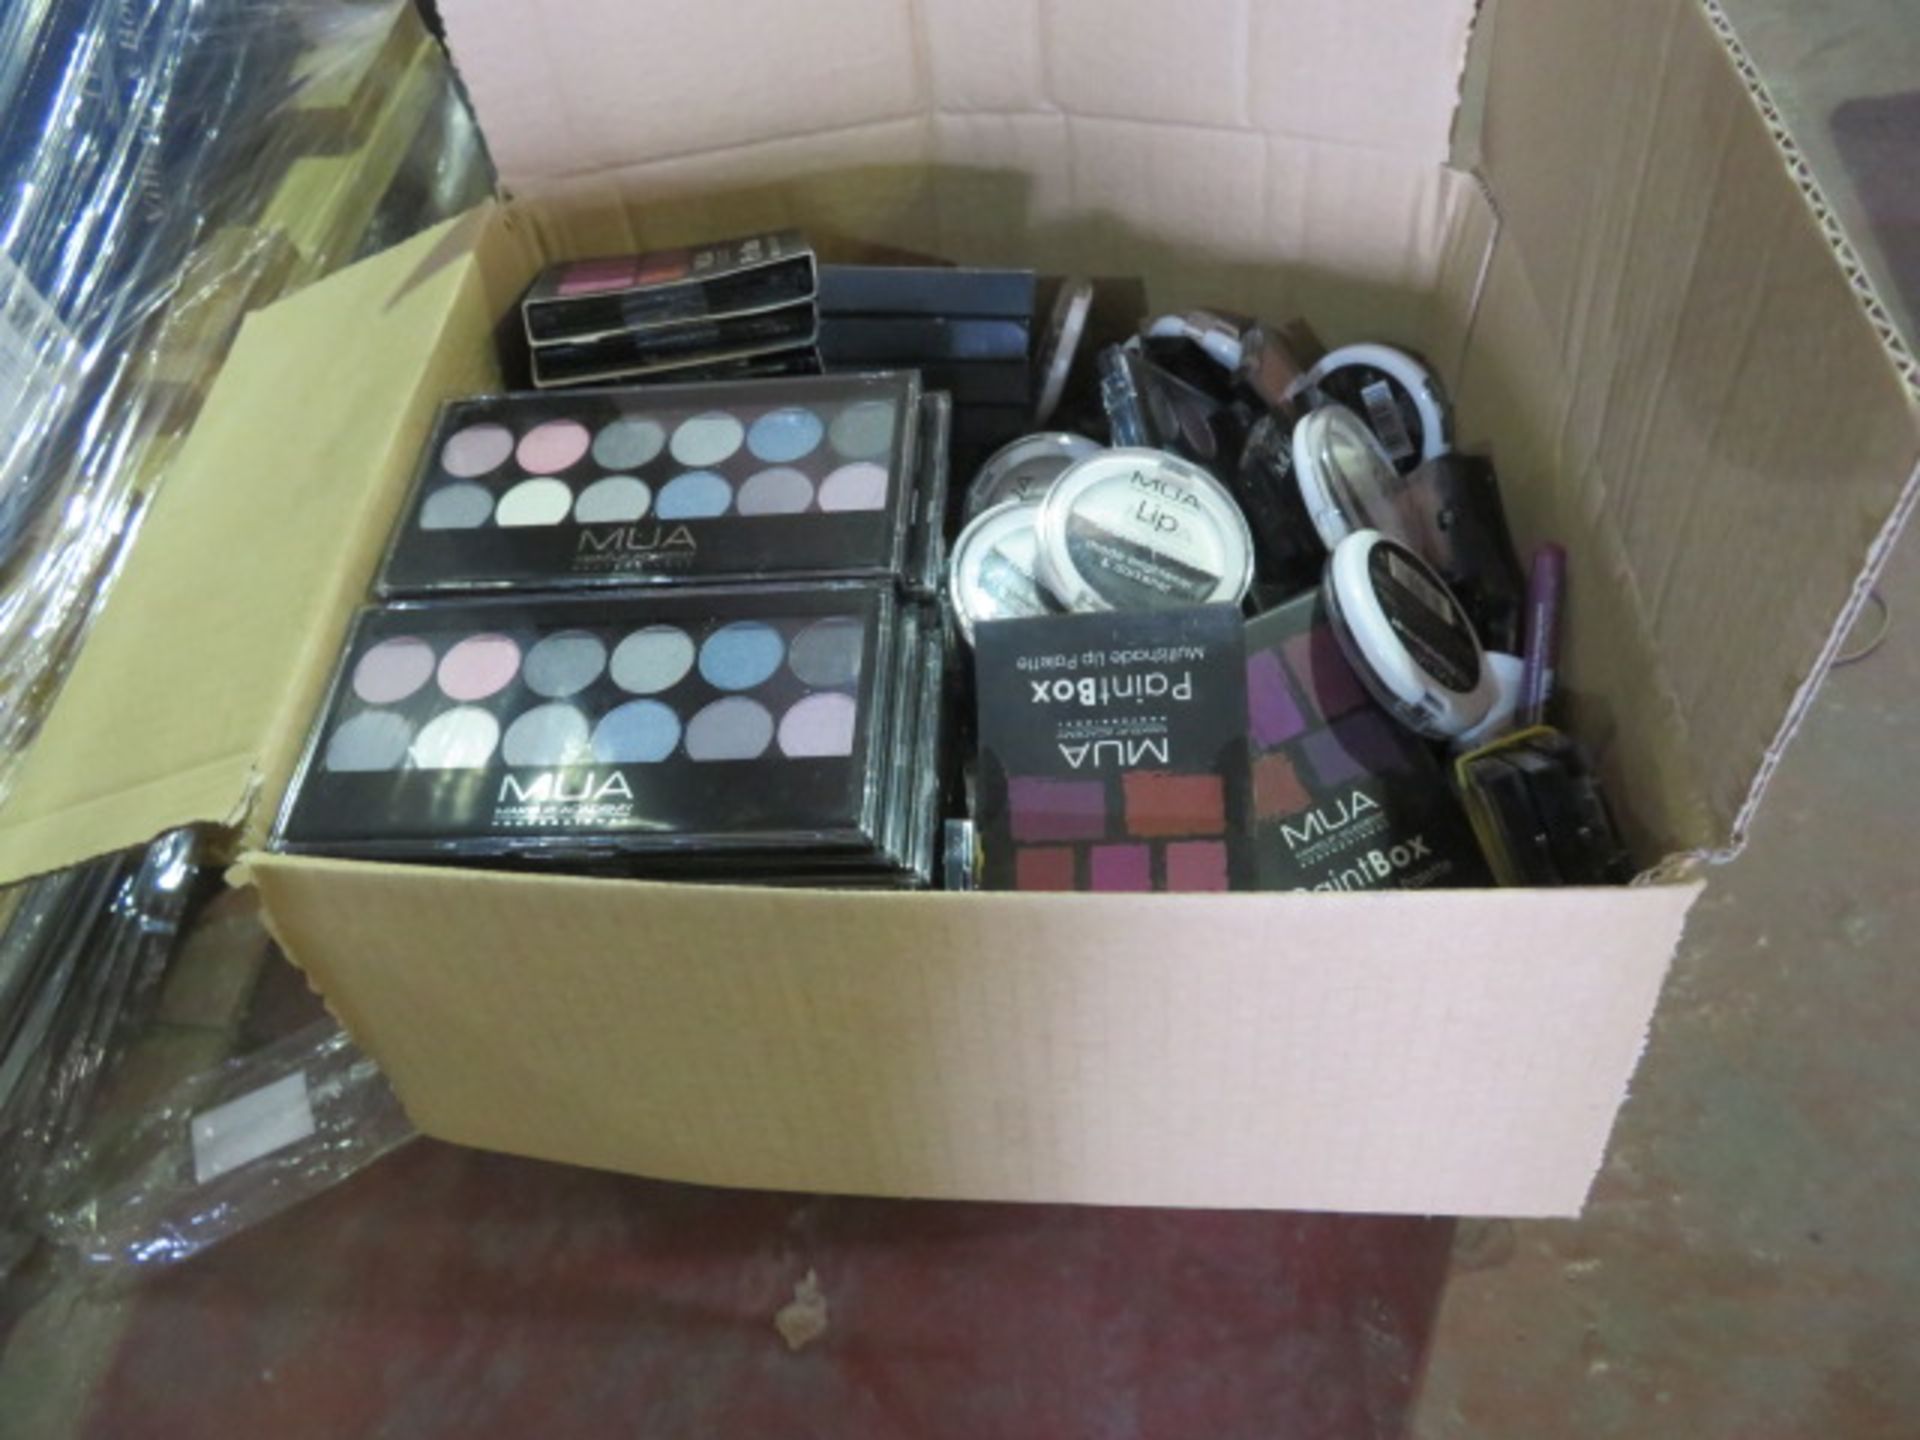 Circa. 200 items of various new make up acadamy make up to include: paint box multishade lip